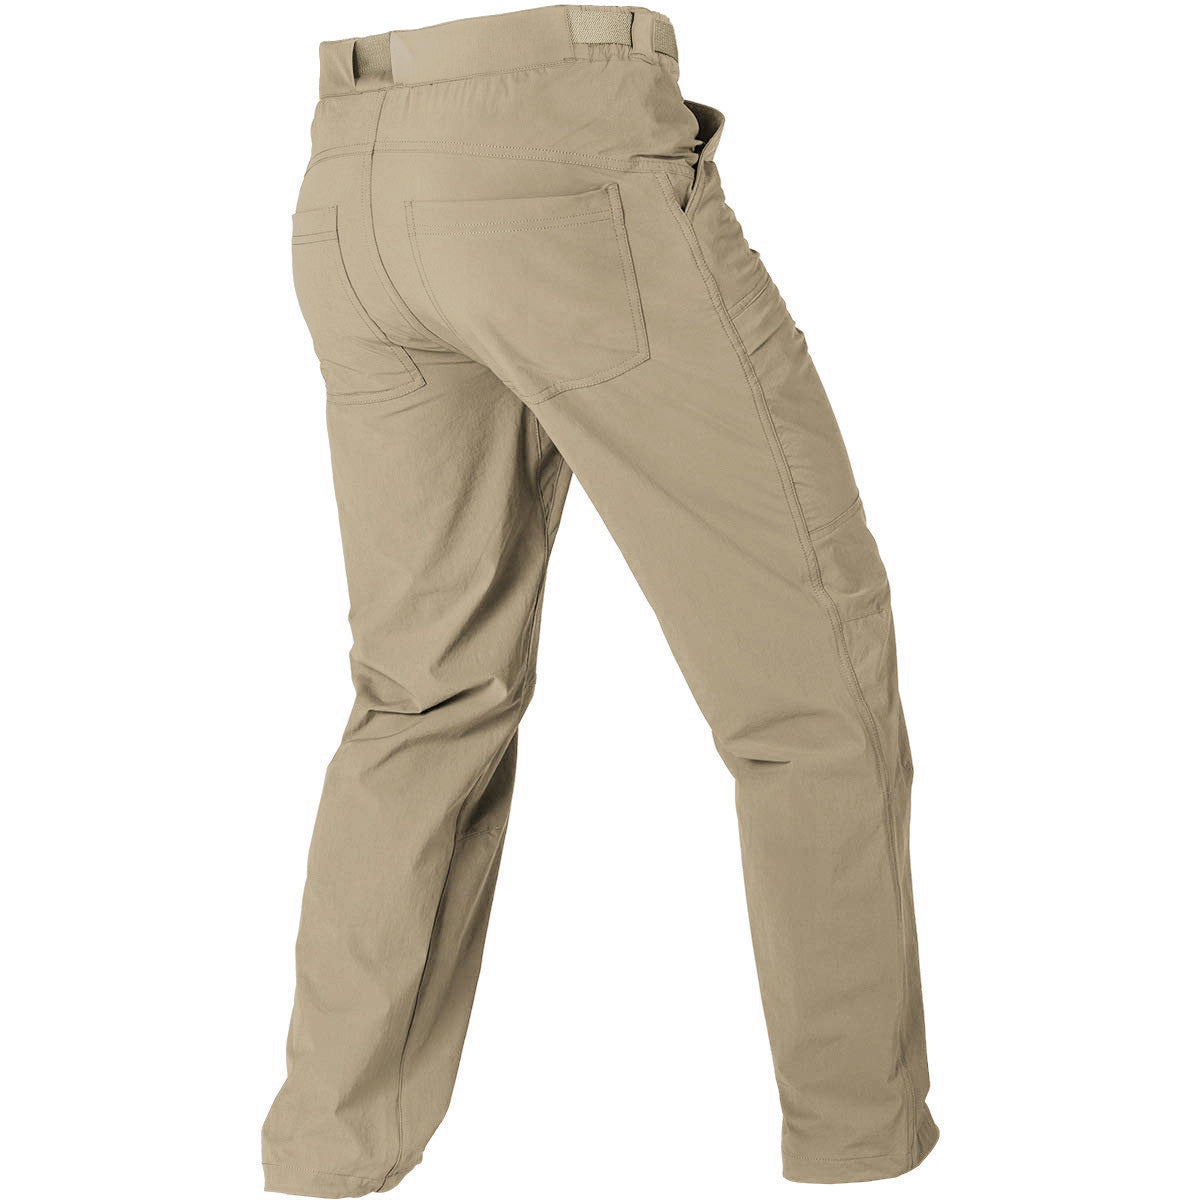 Entyinea Men's Tactical Pants Quick Dry Lightweight Fishing Pants